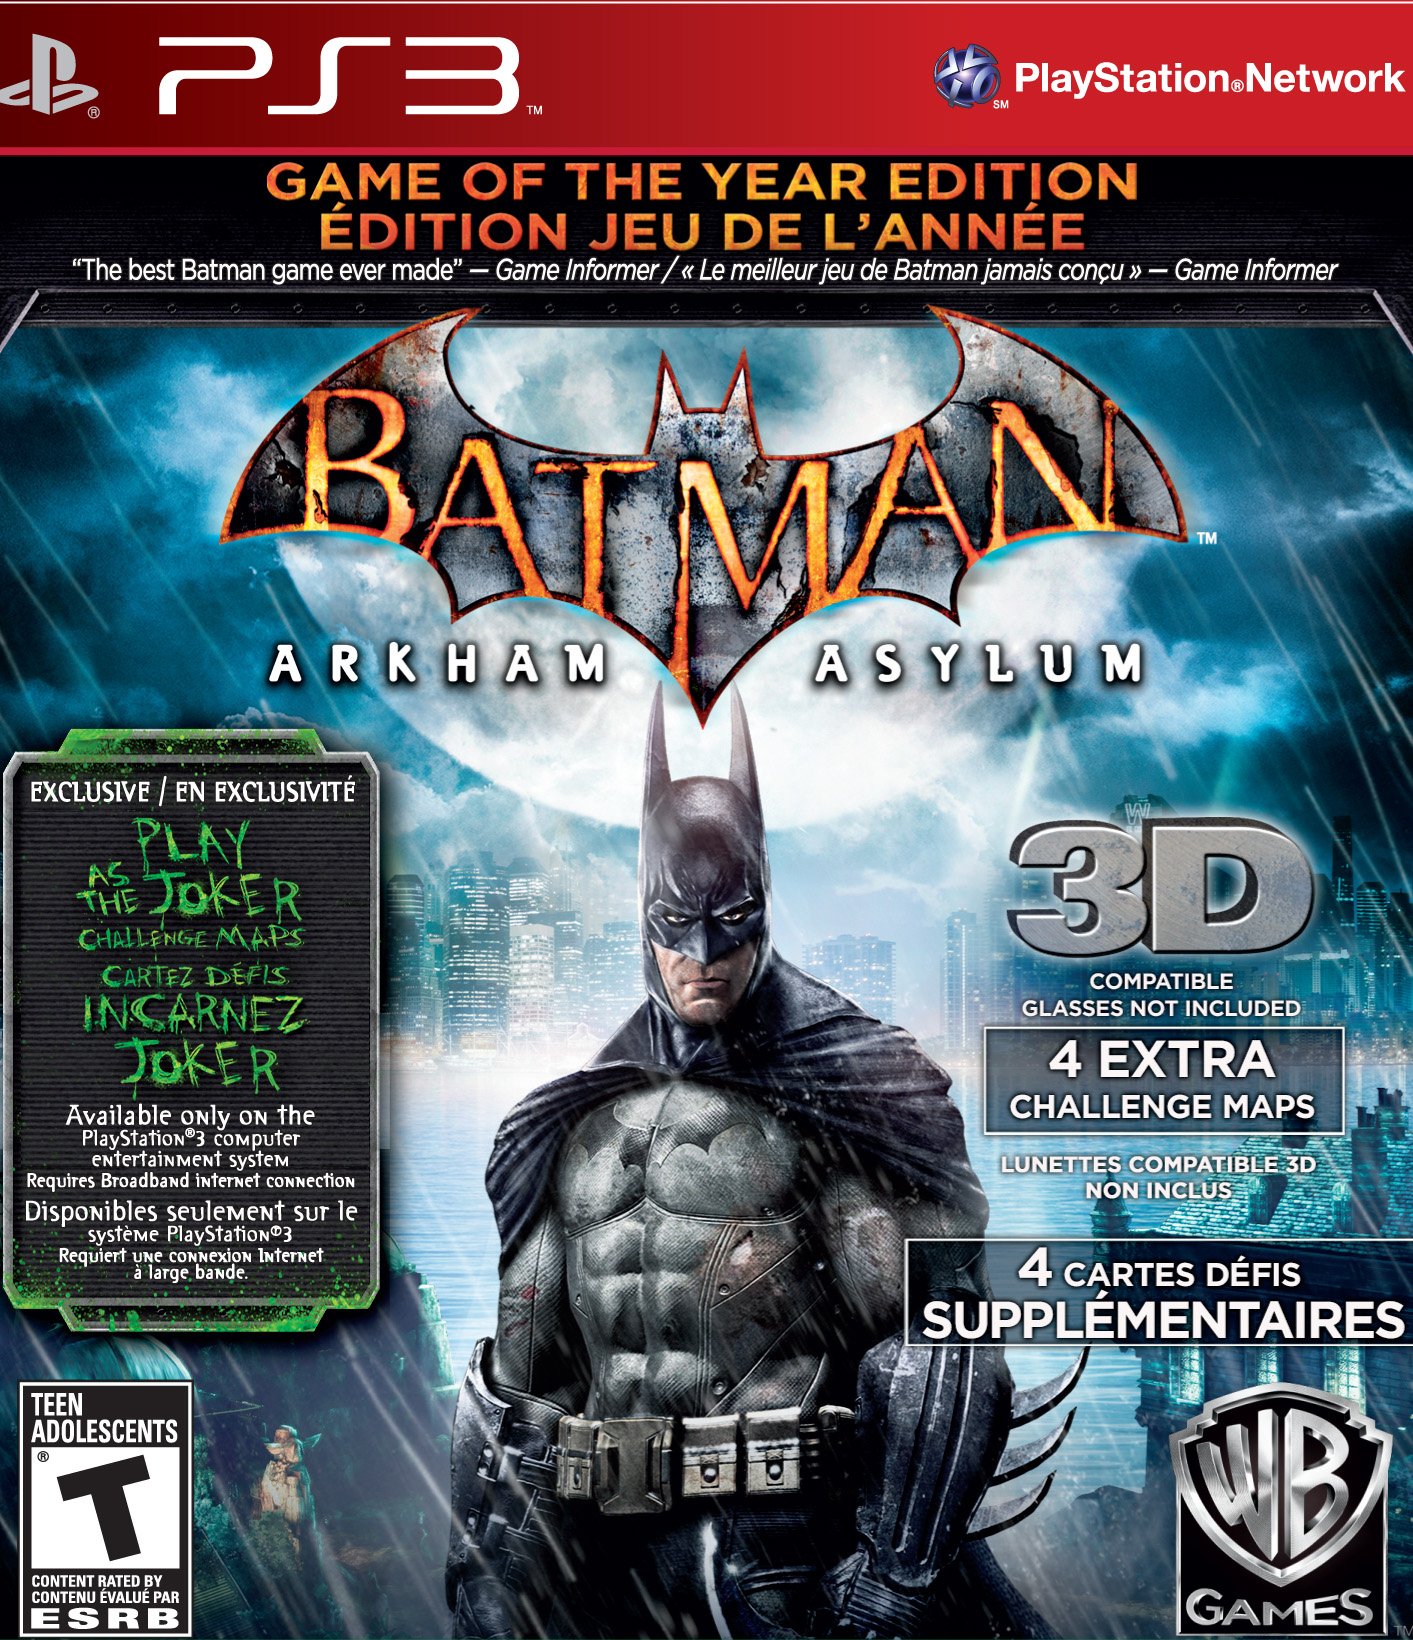 GameSpy: Batman: Arkham Asylum in Guinness Book of World Records